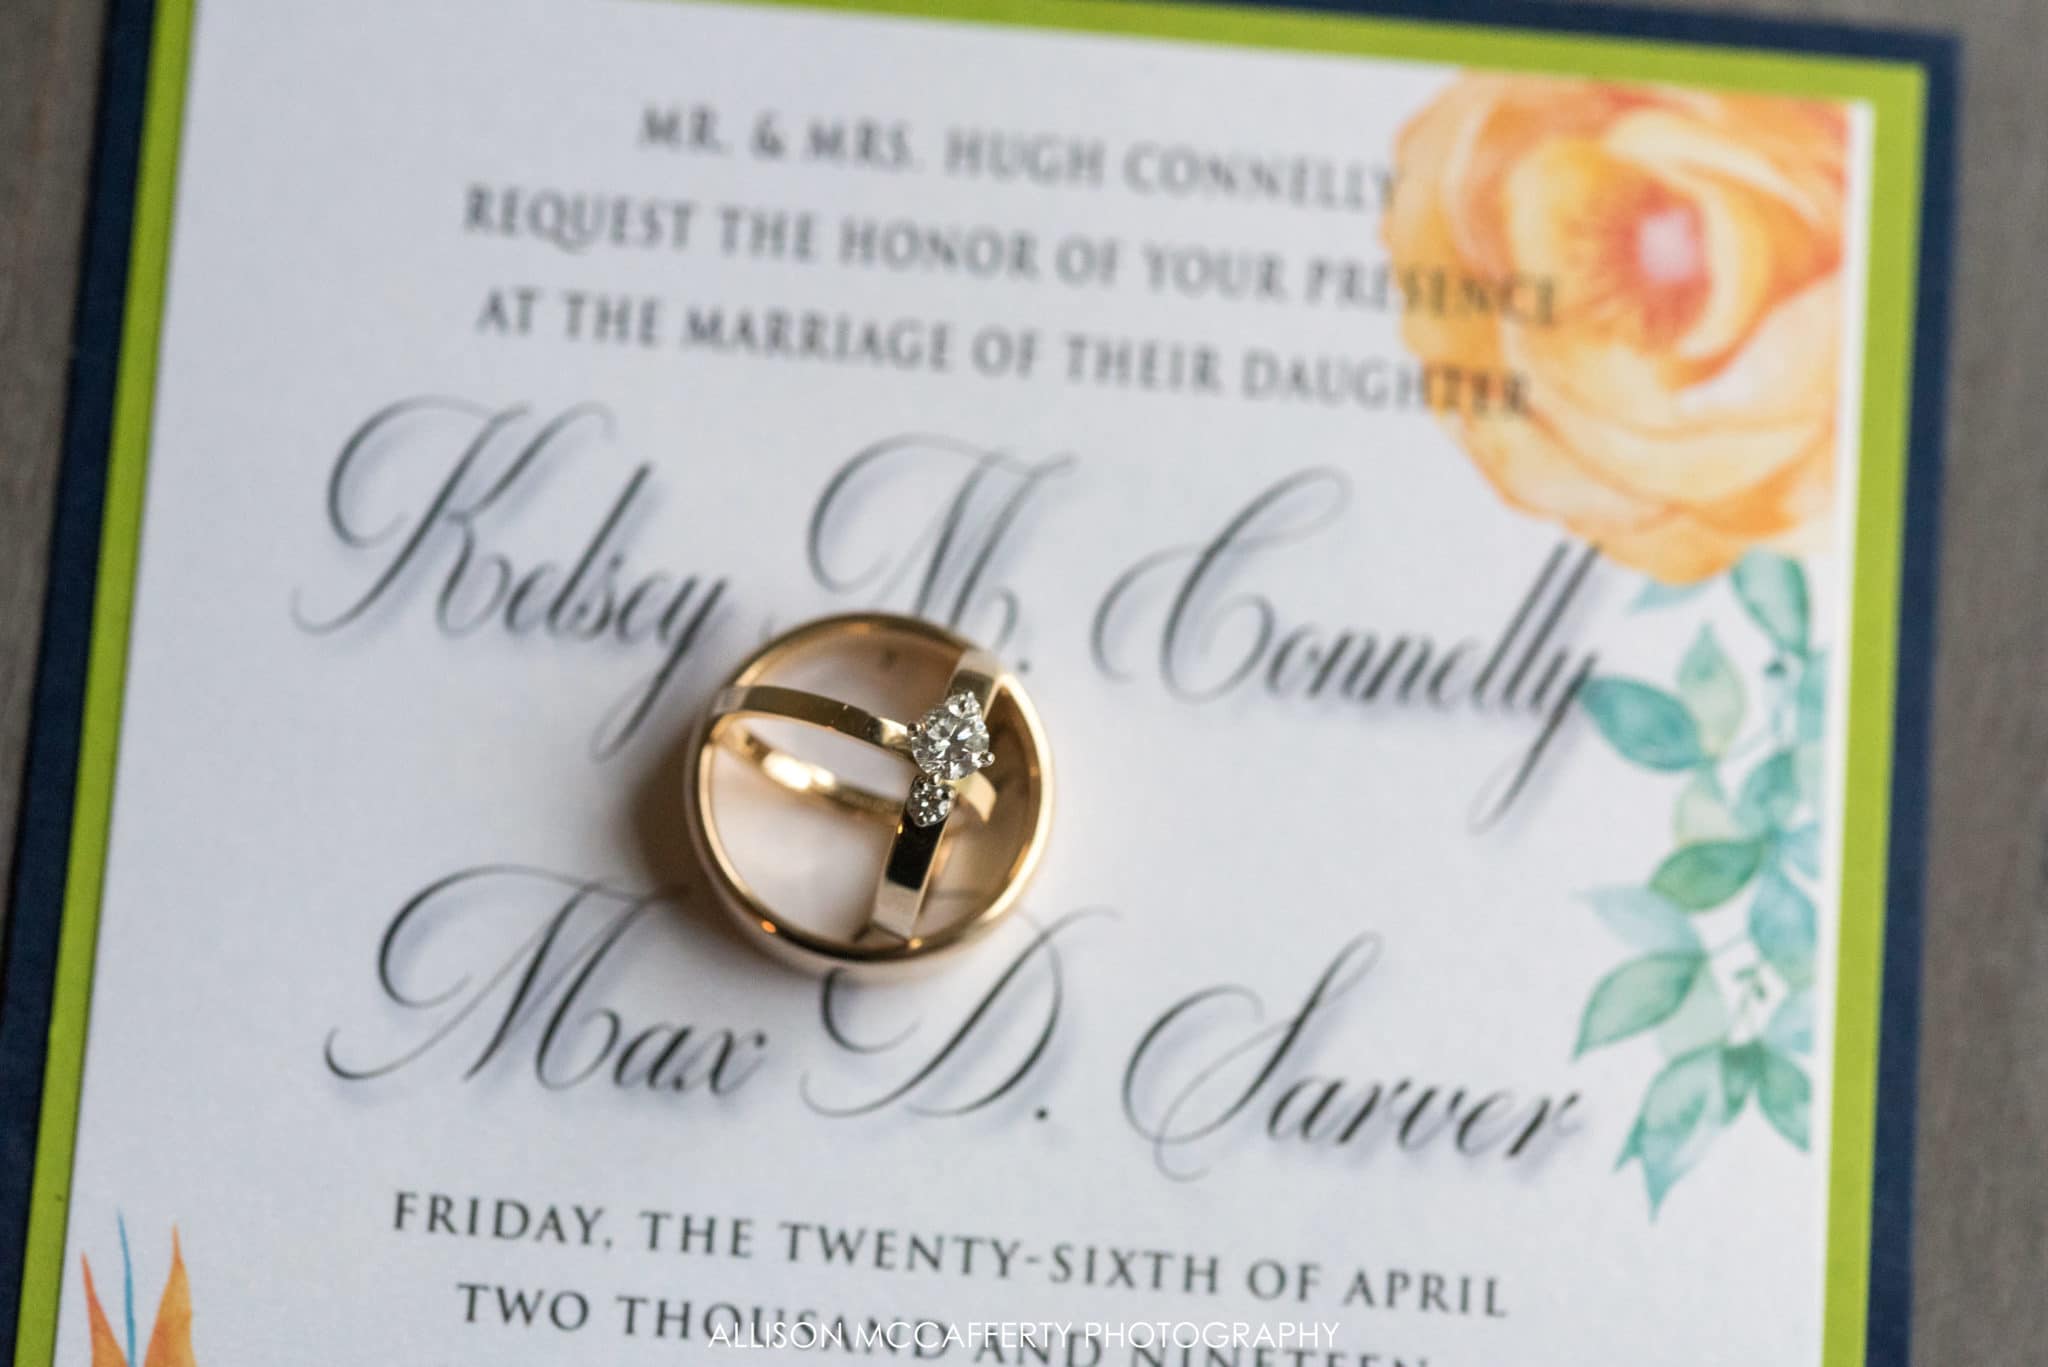 Wedding rings on invitation